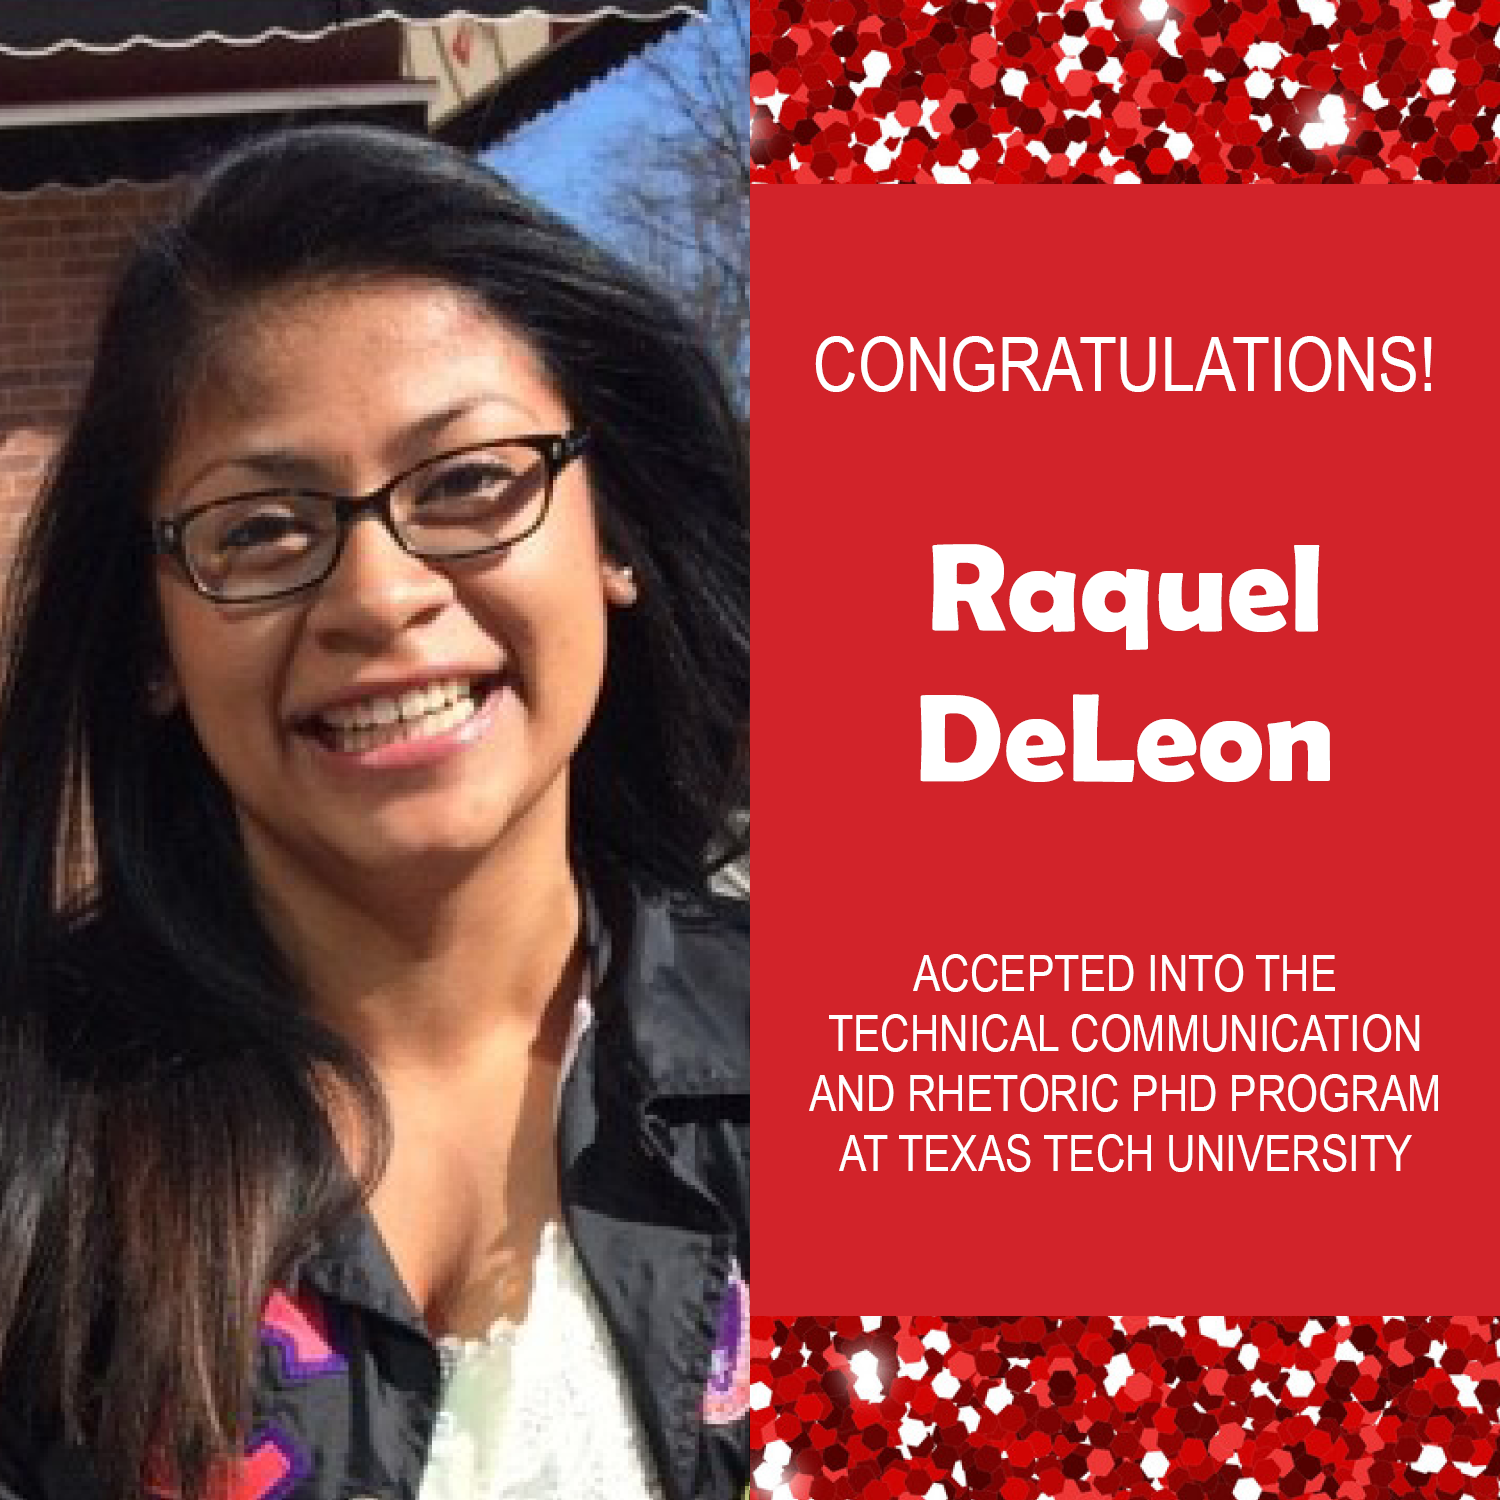 Raquel DeLeon Grad School Acceptances Announcements 2020